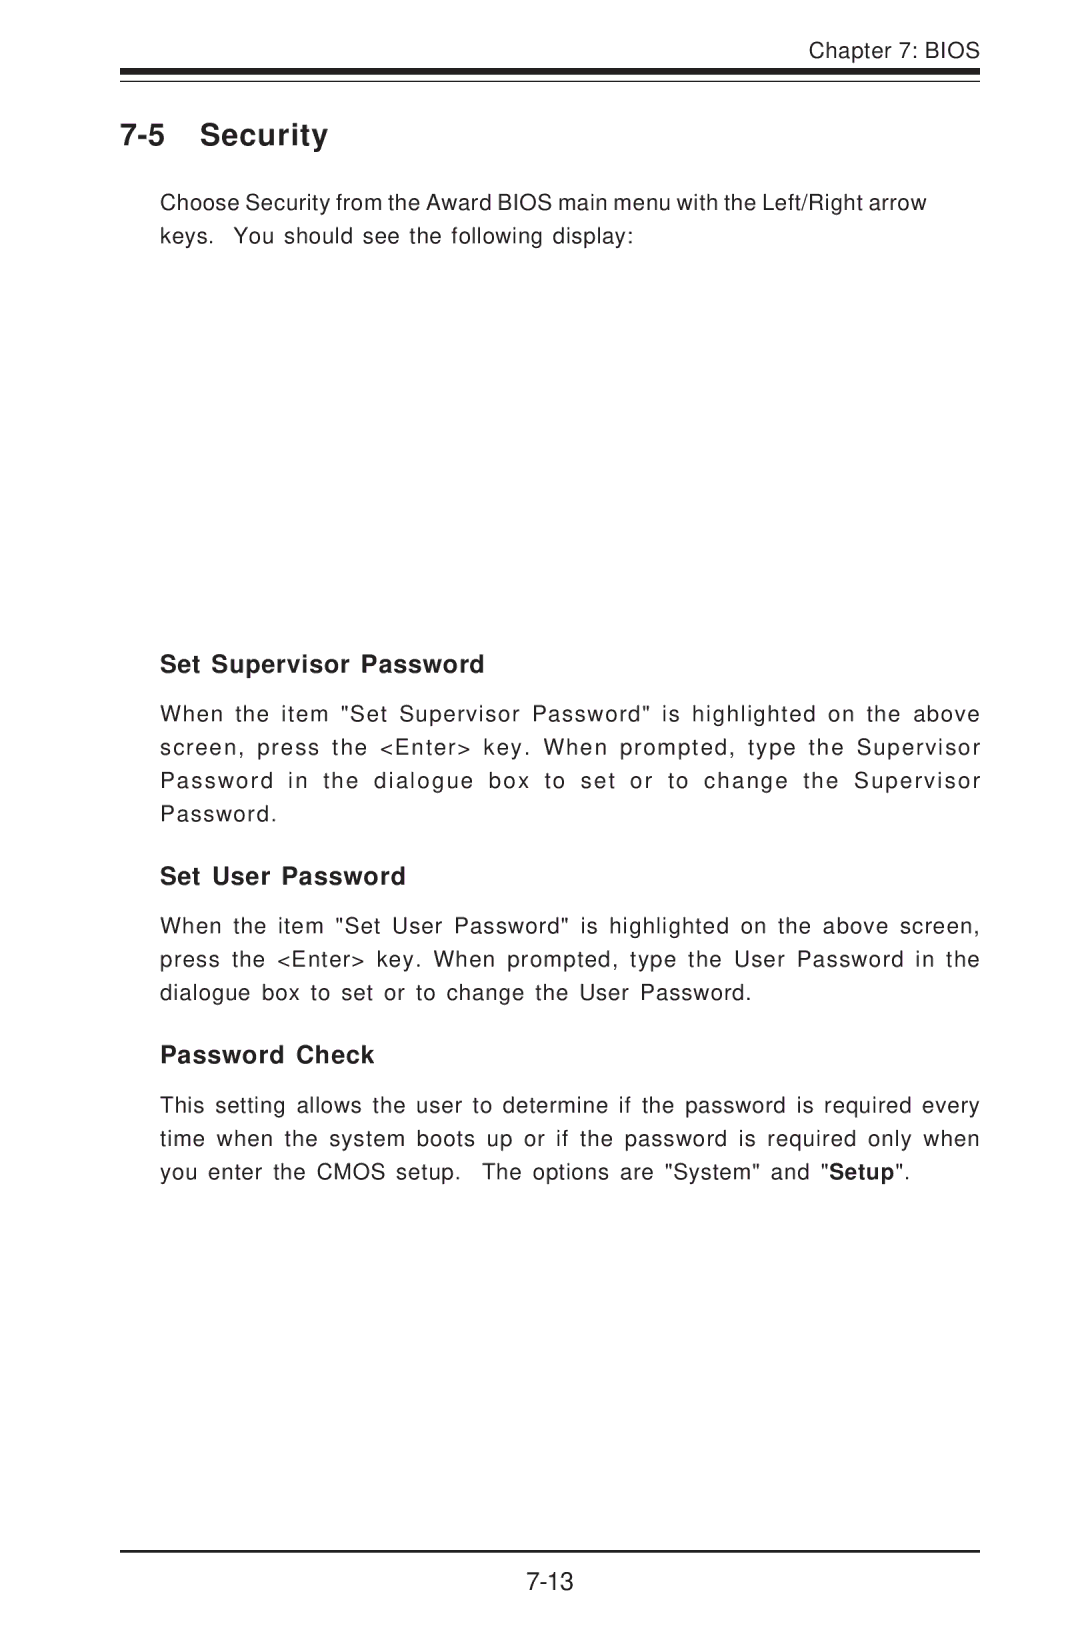 SUPER MICRO Computer 5013C-M8 user manual Security, Set Supervisor Password, Set User Password, Password Check 